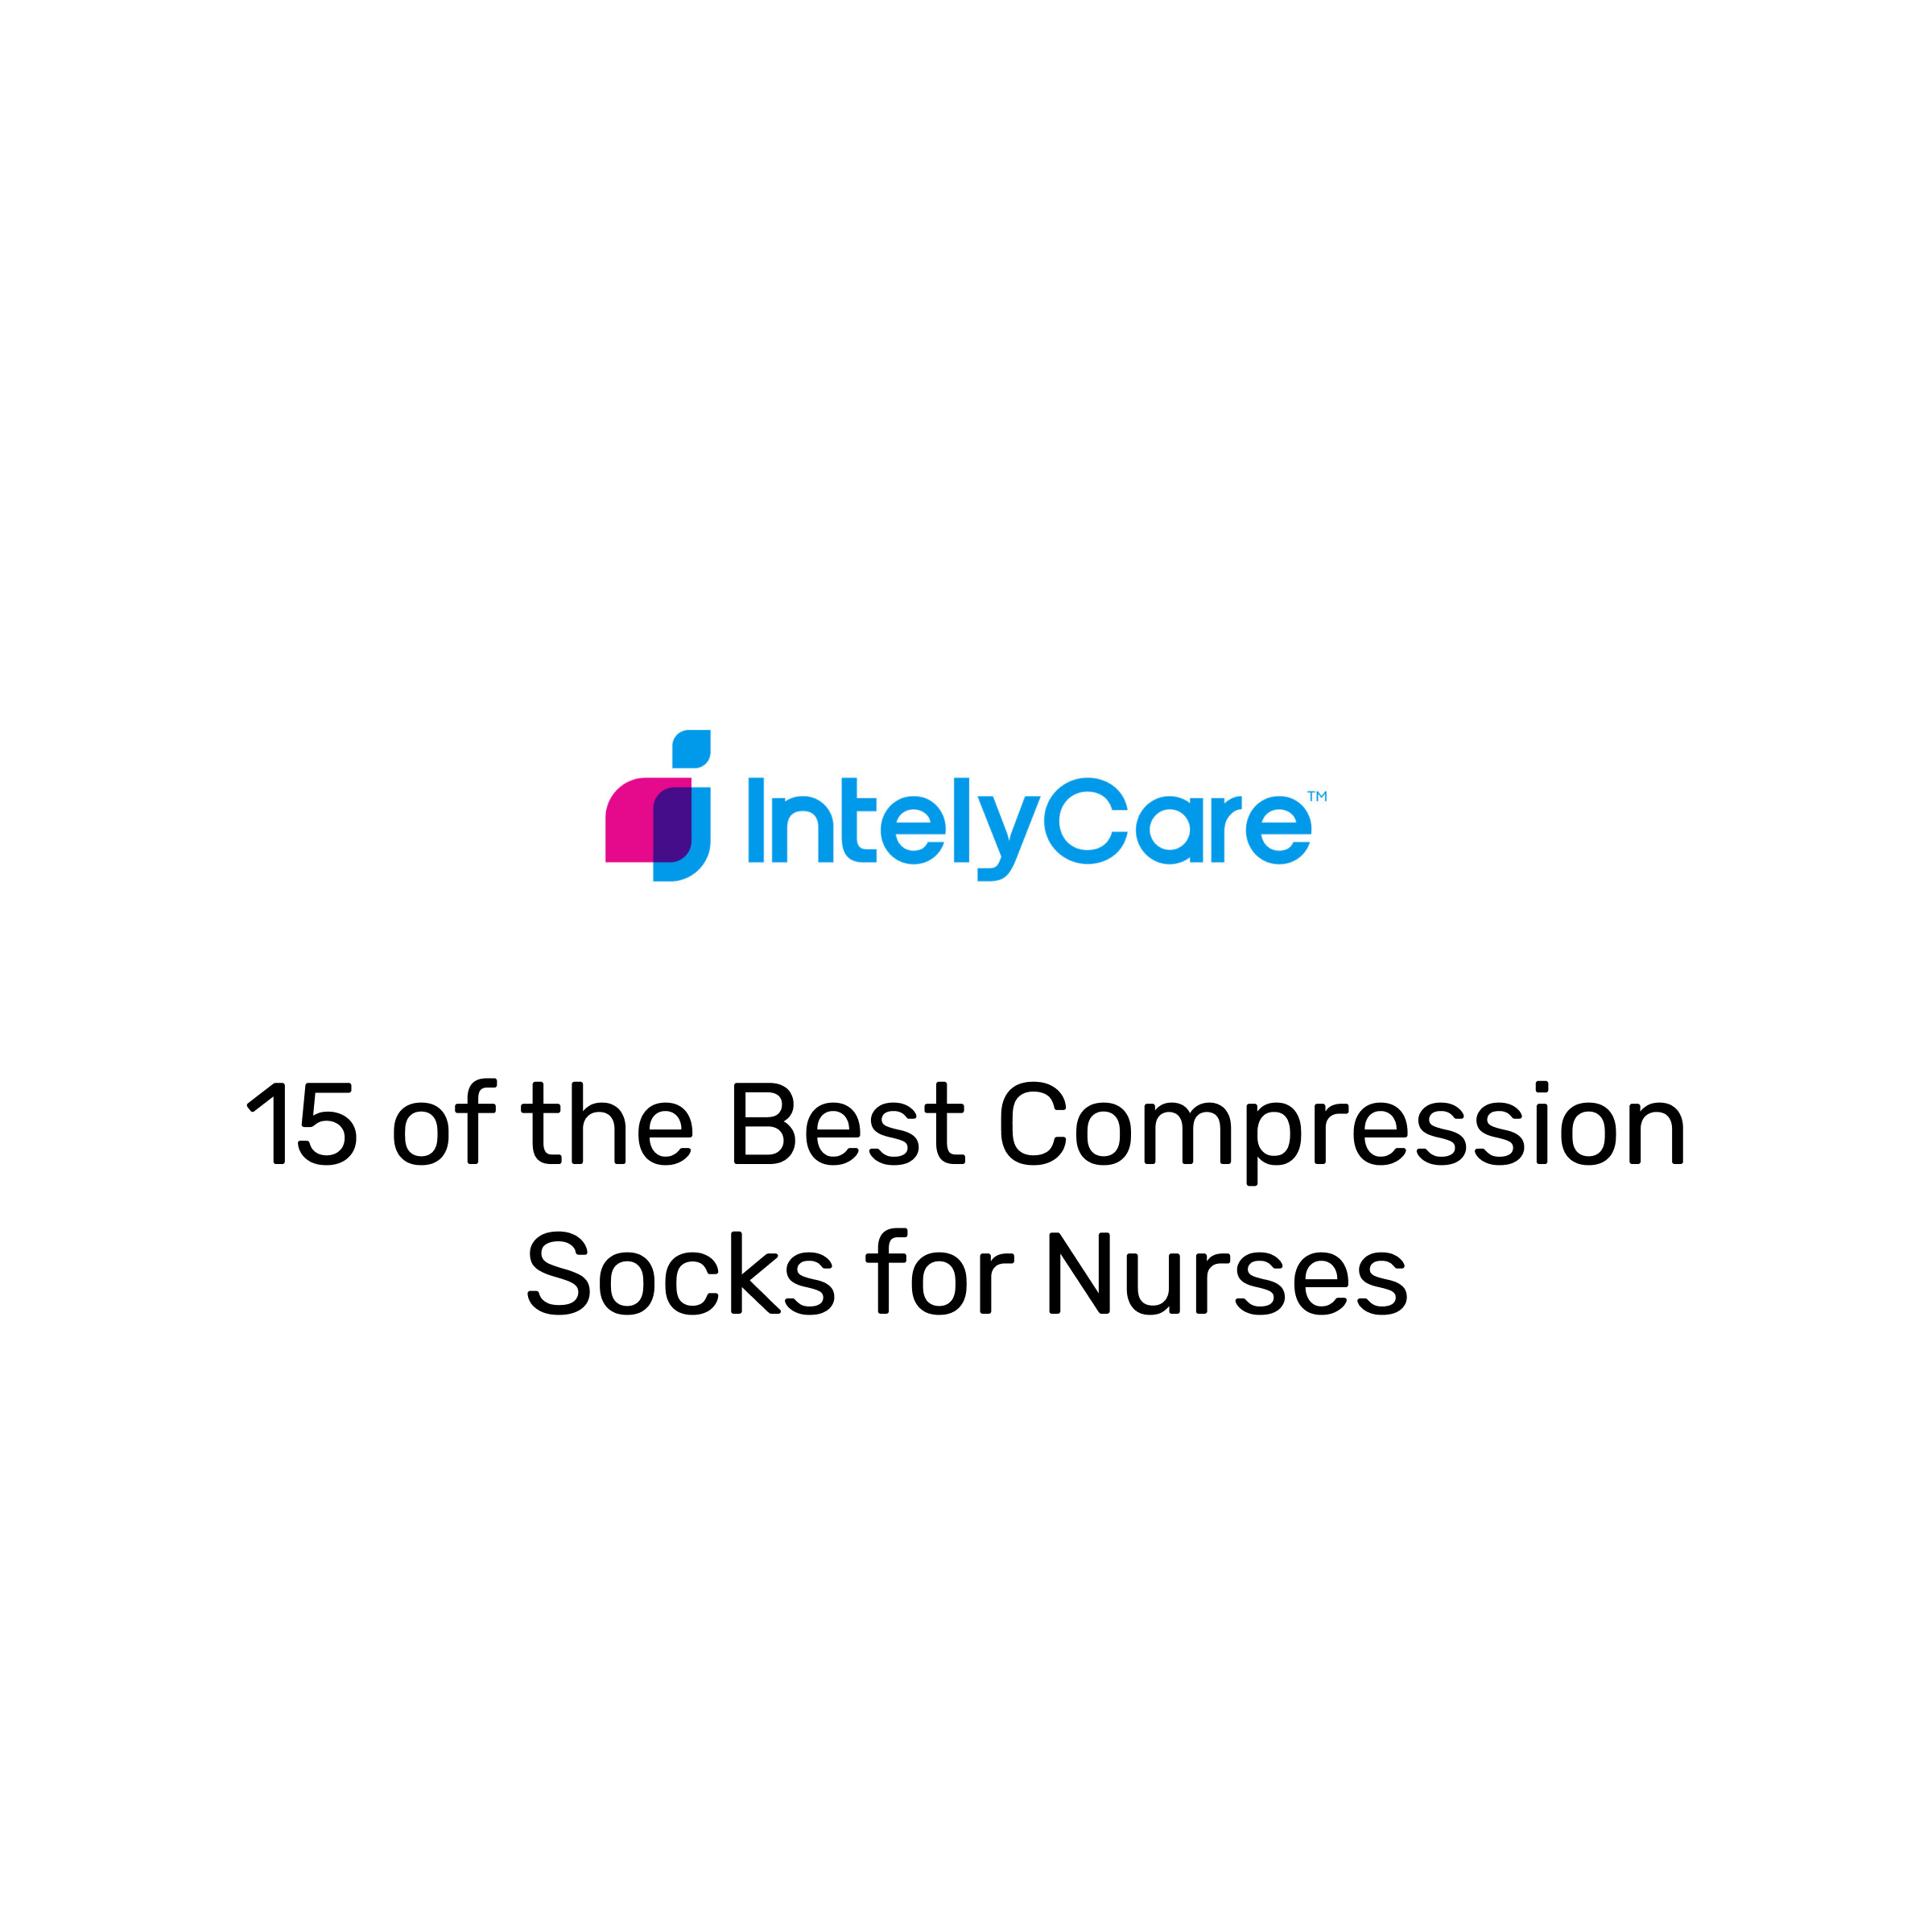 15 of the Best Compression Socks for Nurses